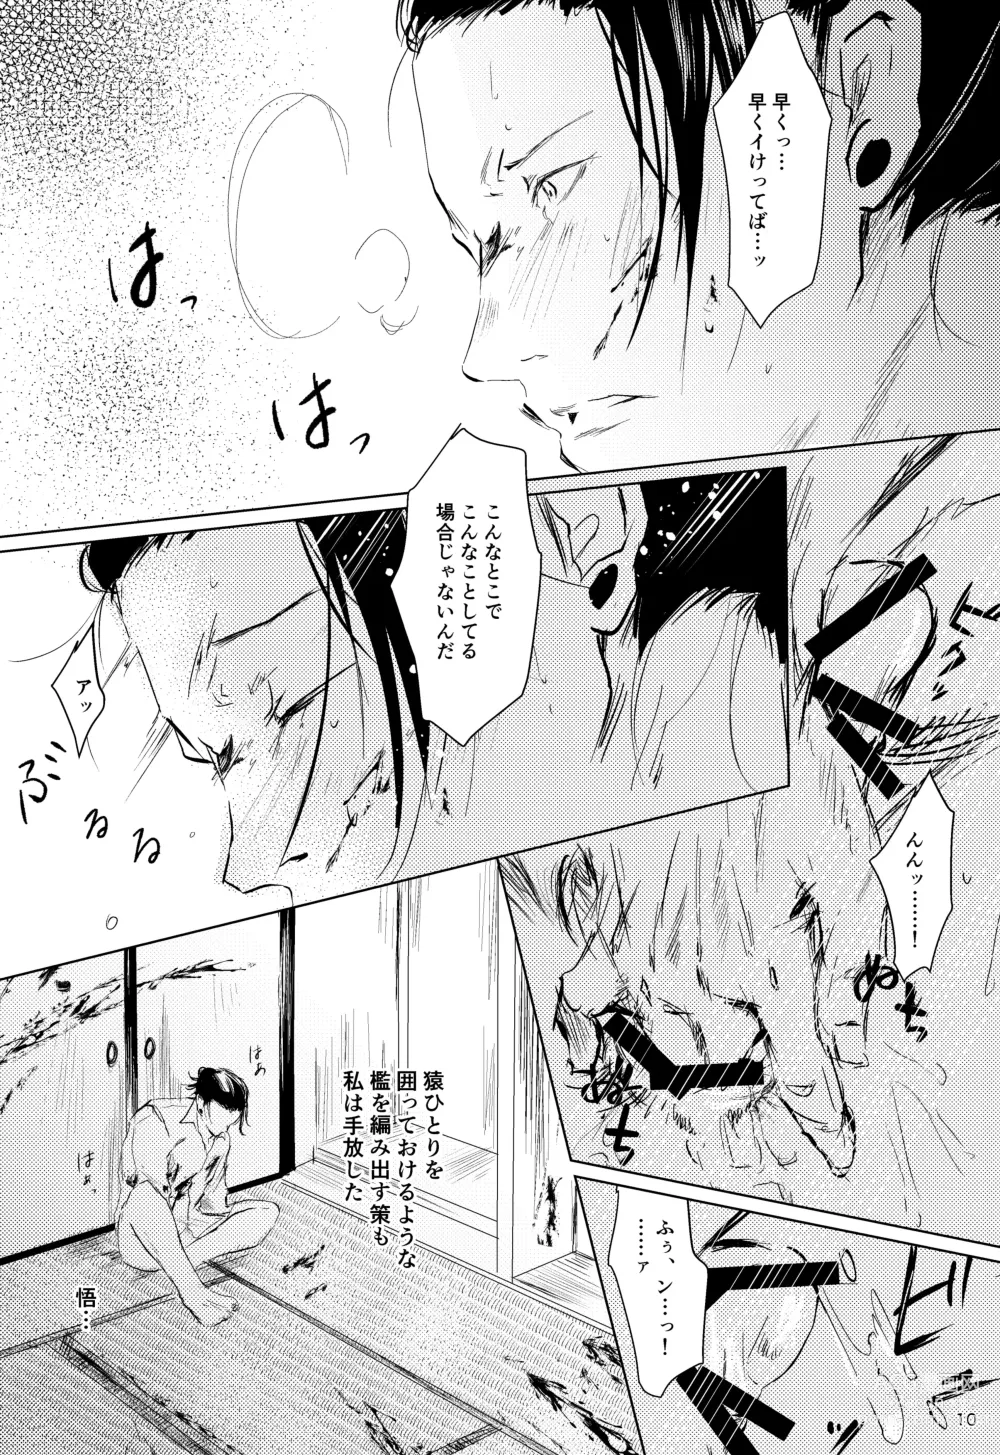 Page 9 of doujinshi Hana kanmuri